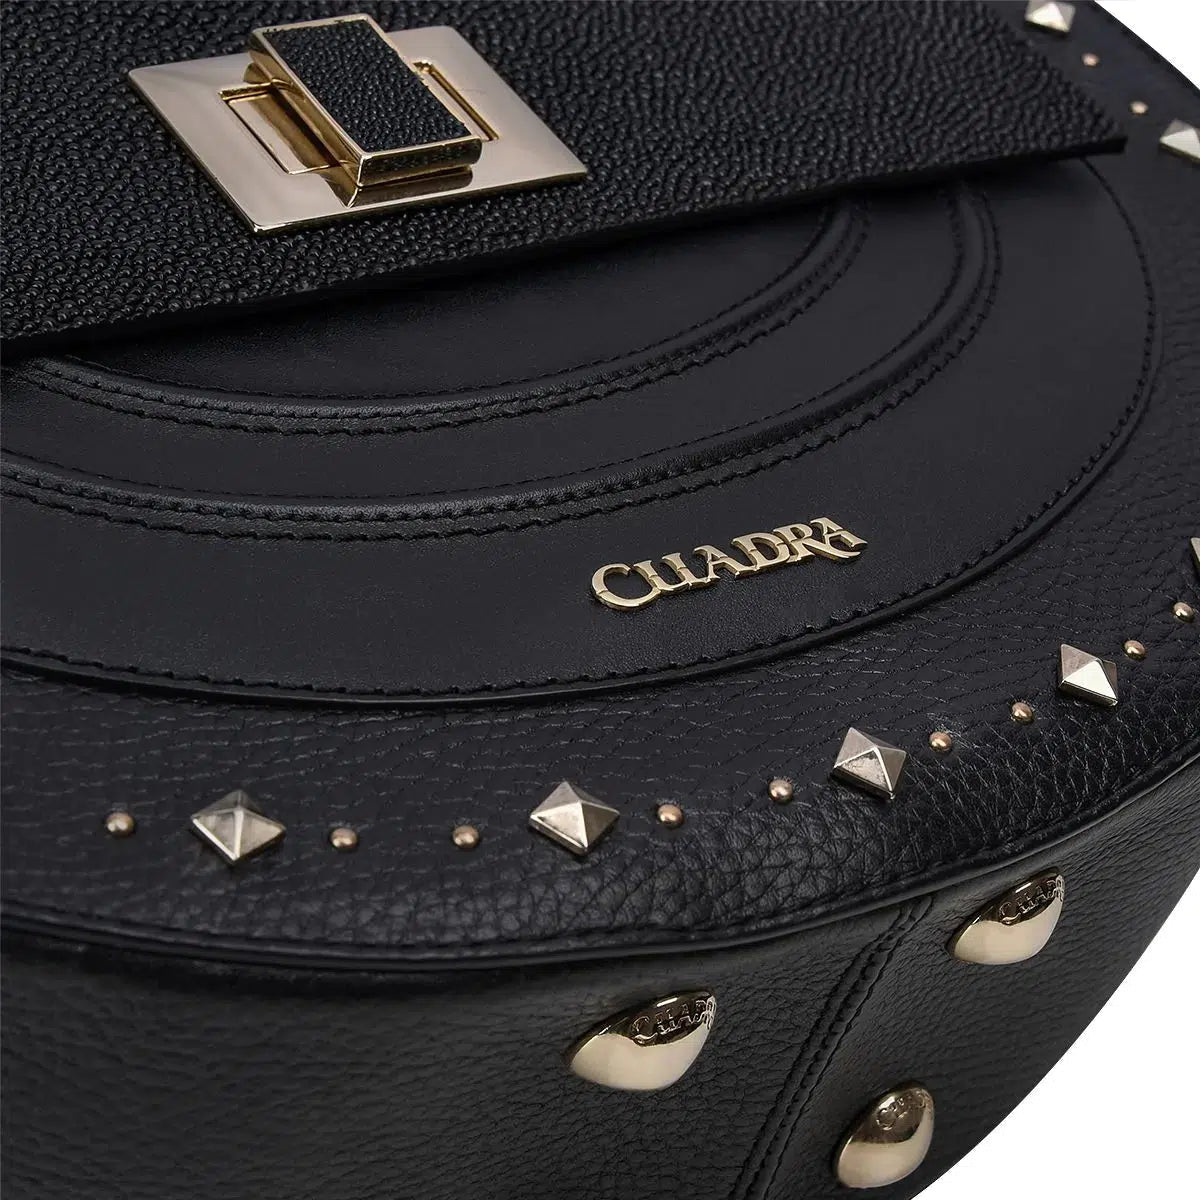 BOD46MA - Cuadra black fashion stingray crossbody bag for women-Kuet.us